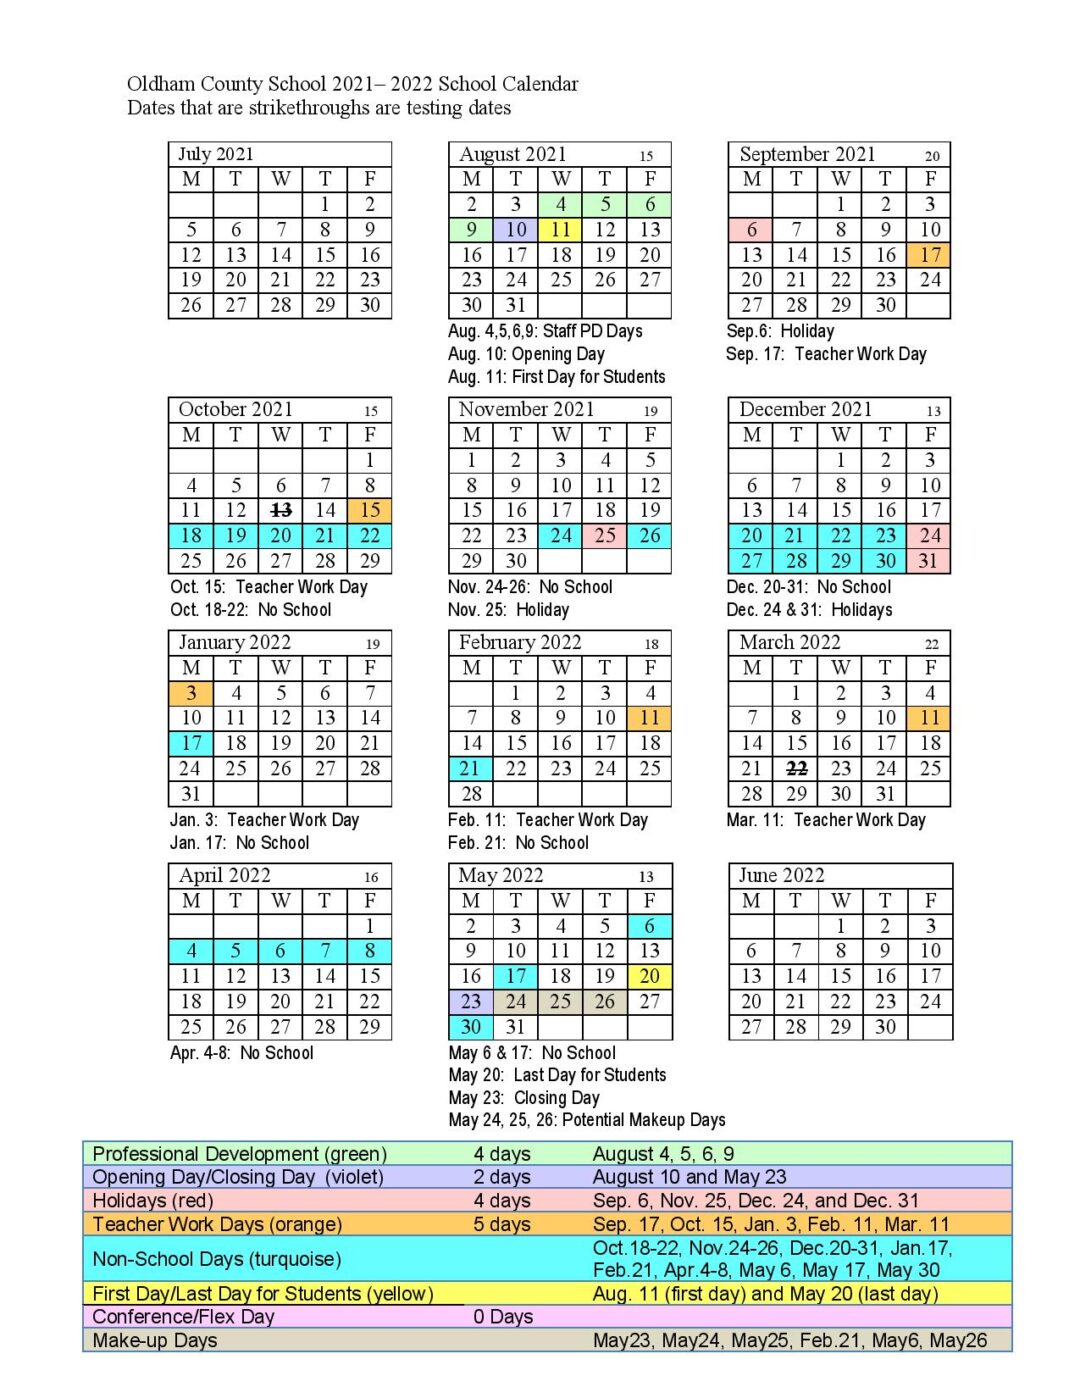 oldham-county-schools-calendar-2021-2022-in-pdf